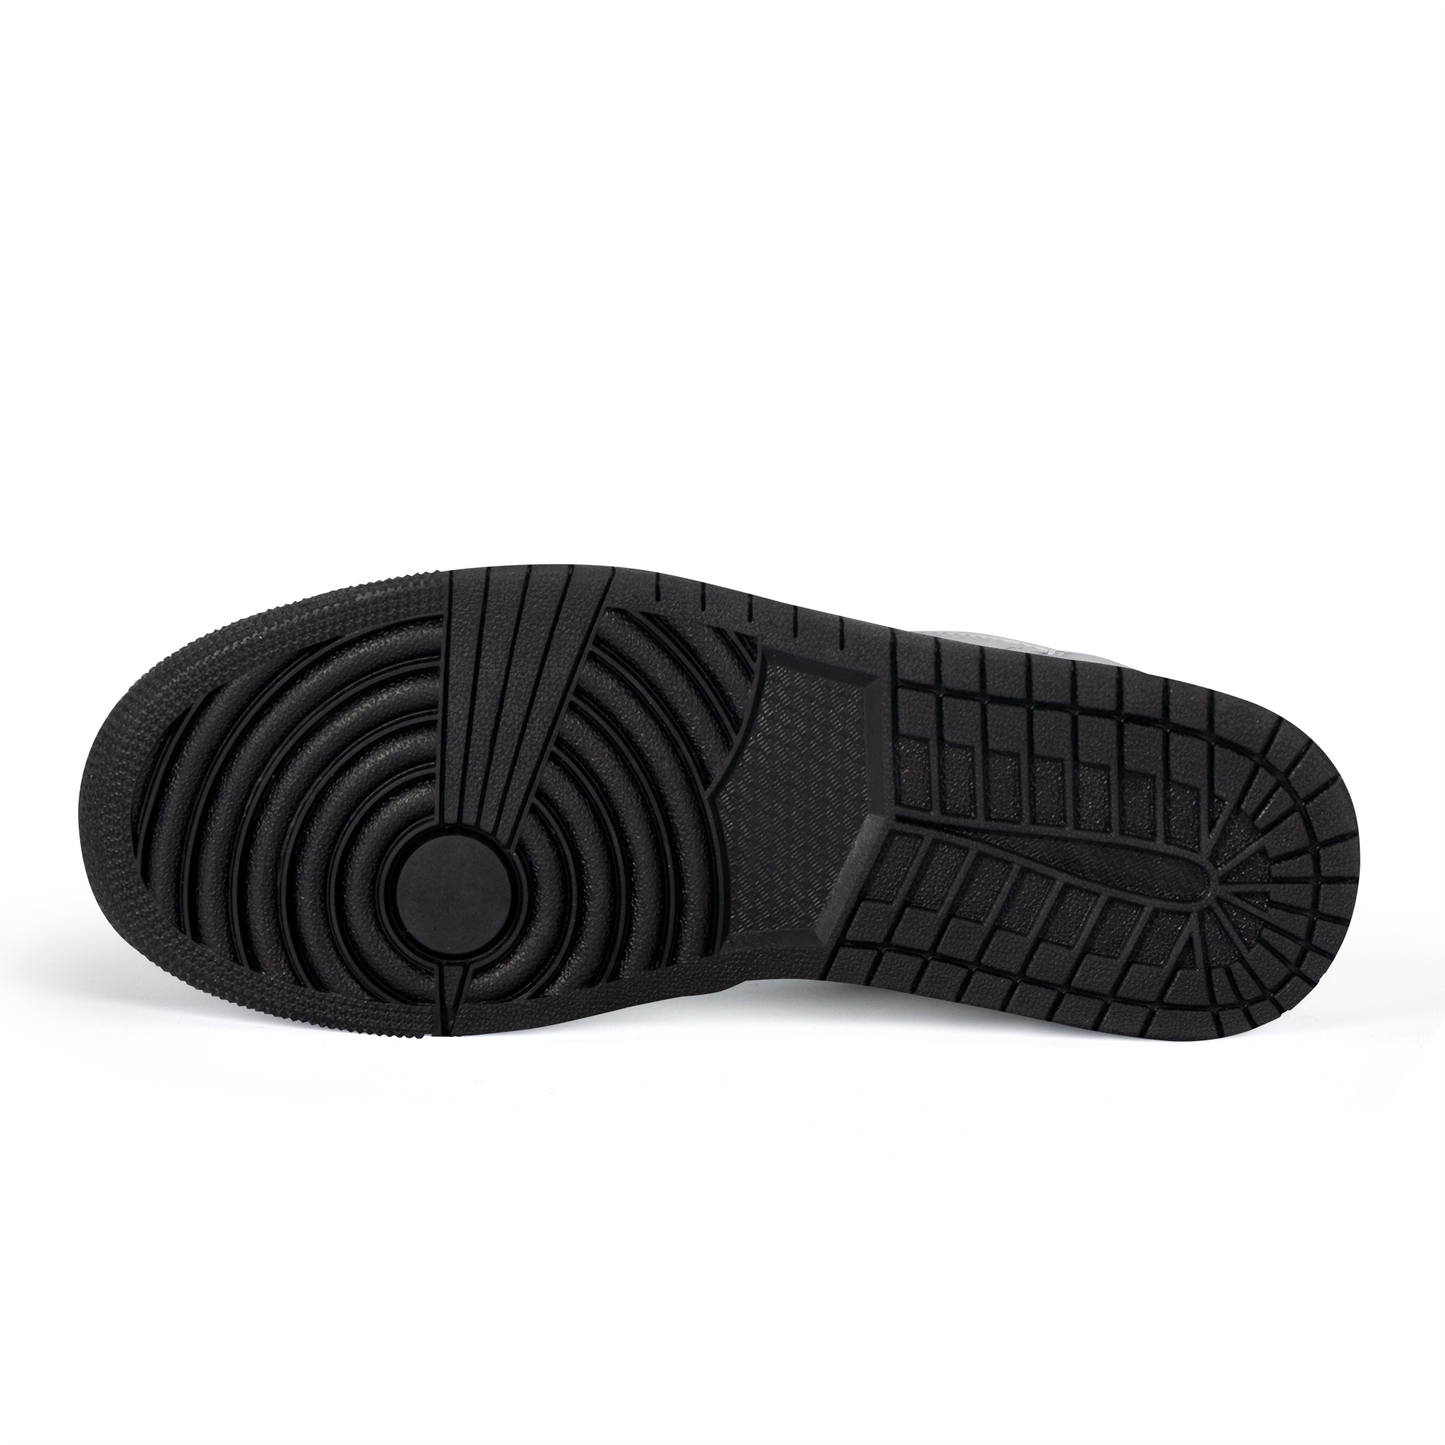 RVT Brand  Unisex Low Top Skateboard Sneakers -420 Grey